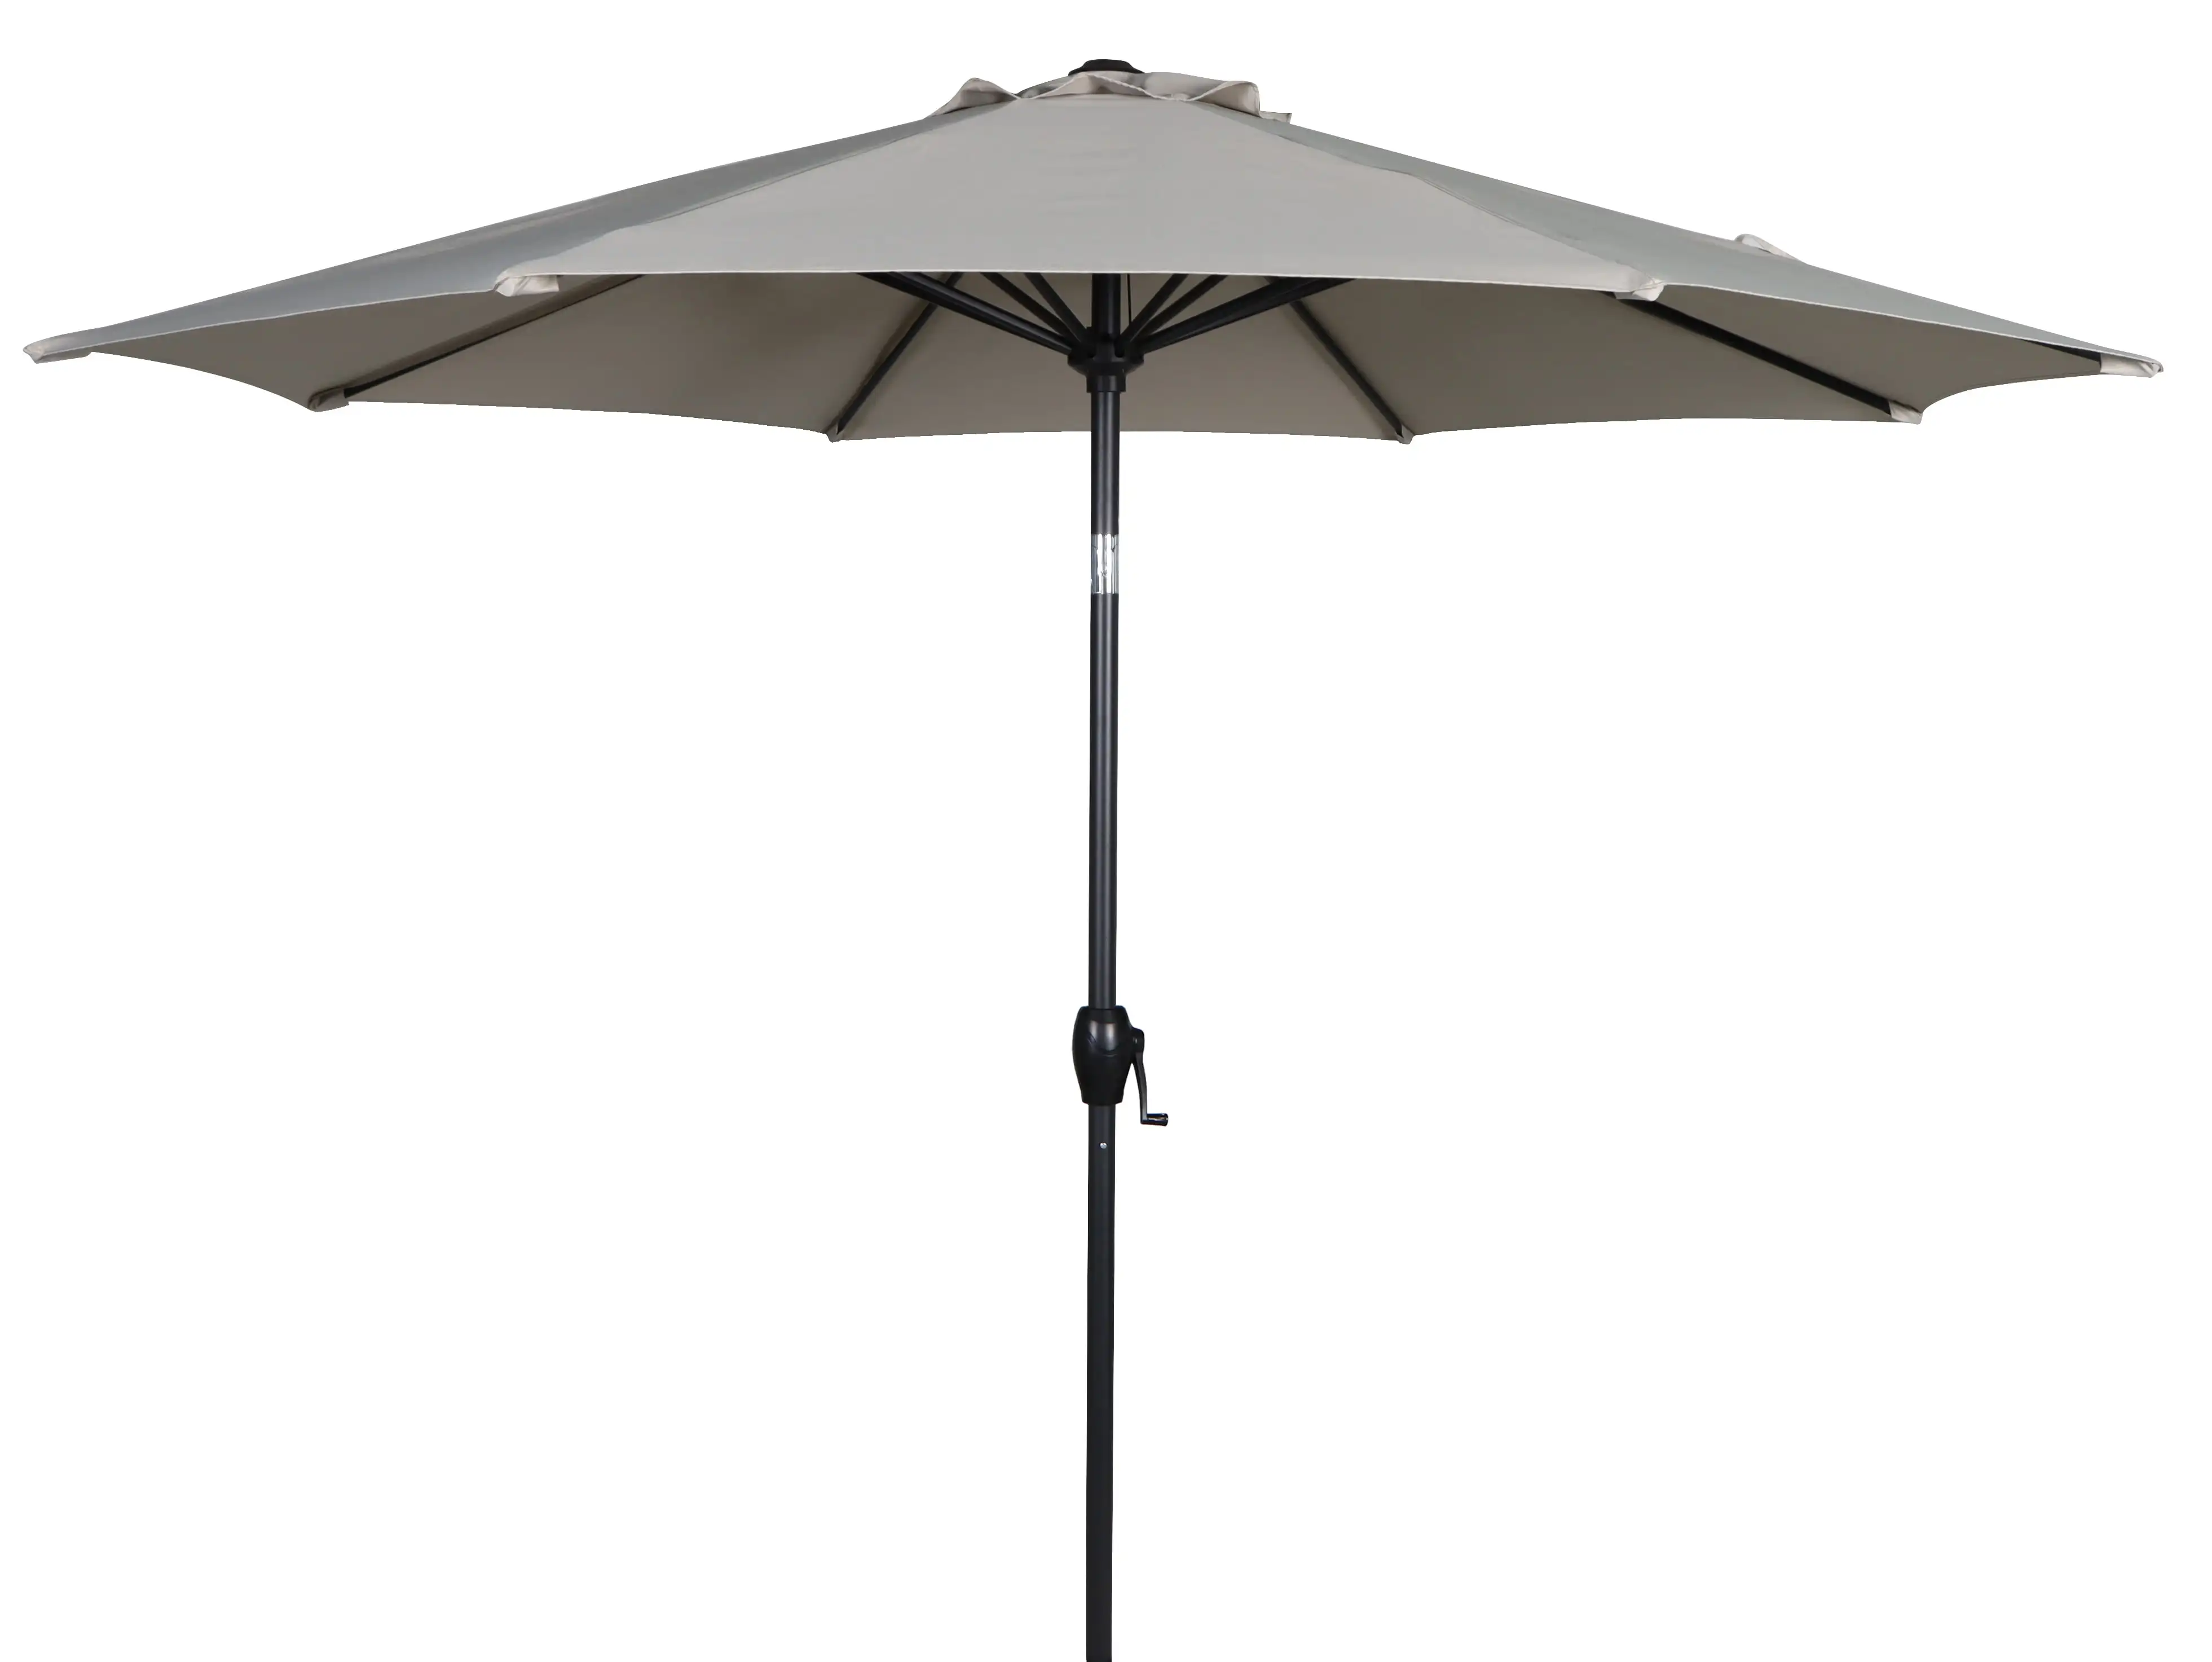 9ft Stone Round Outdoor Tilting Market Patio Umbrella with Crank umbrella base